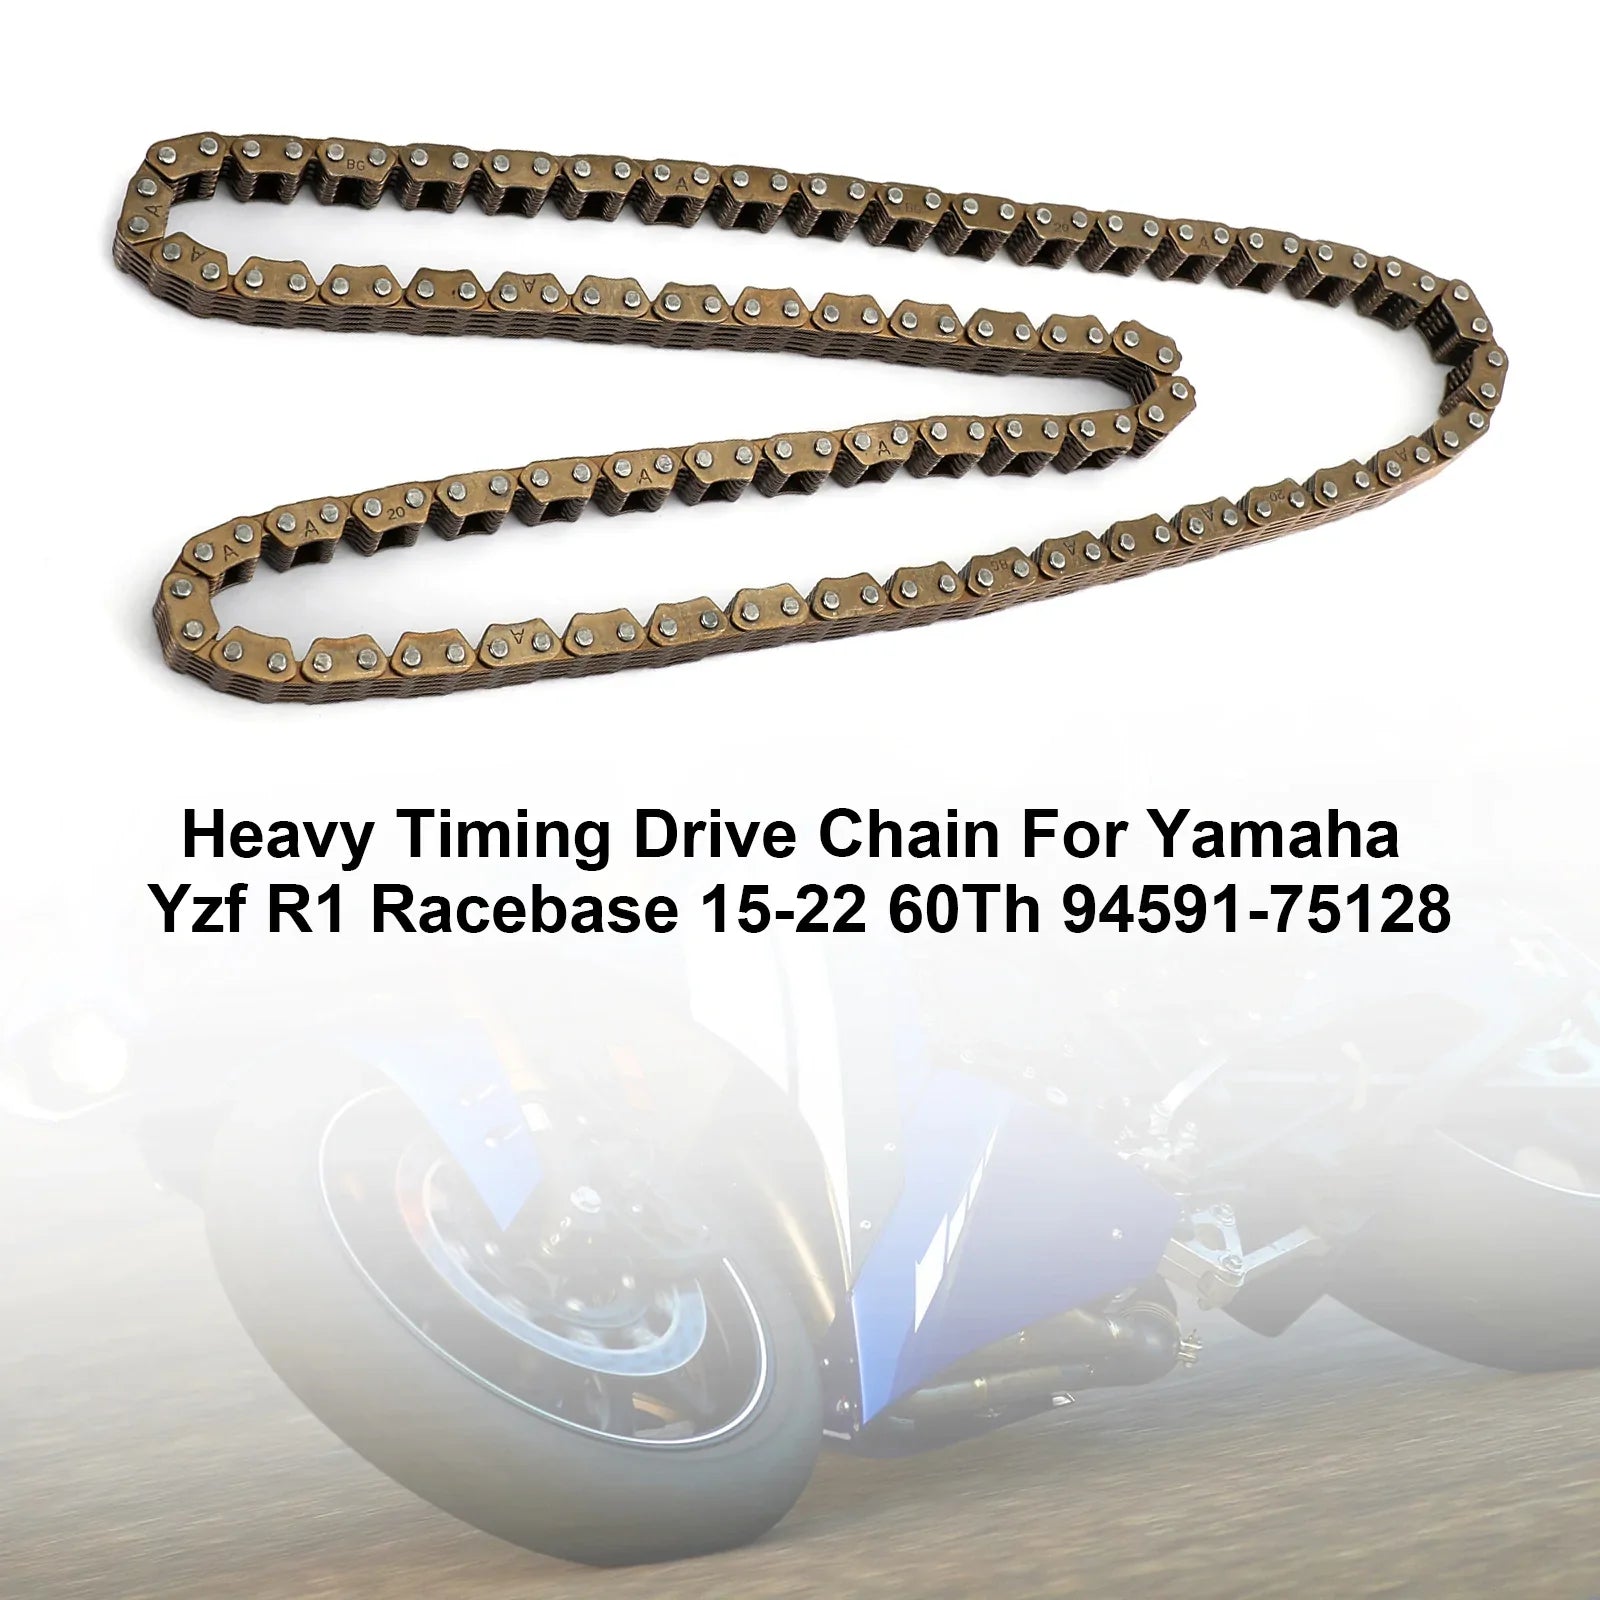 2015-2022 Yamaha Yzf R1 Racebase 60Th 94591-75128 Catena di trasmissione Catena per impieghi gravosi